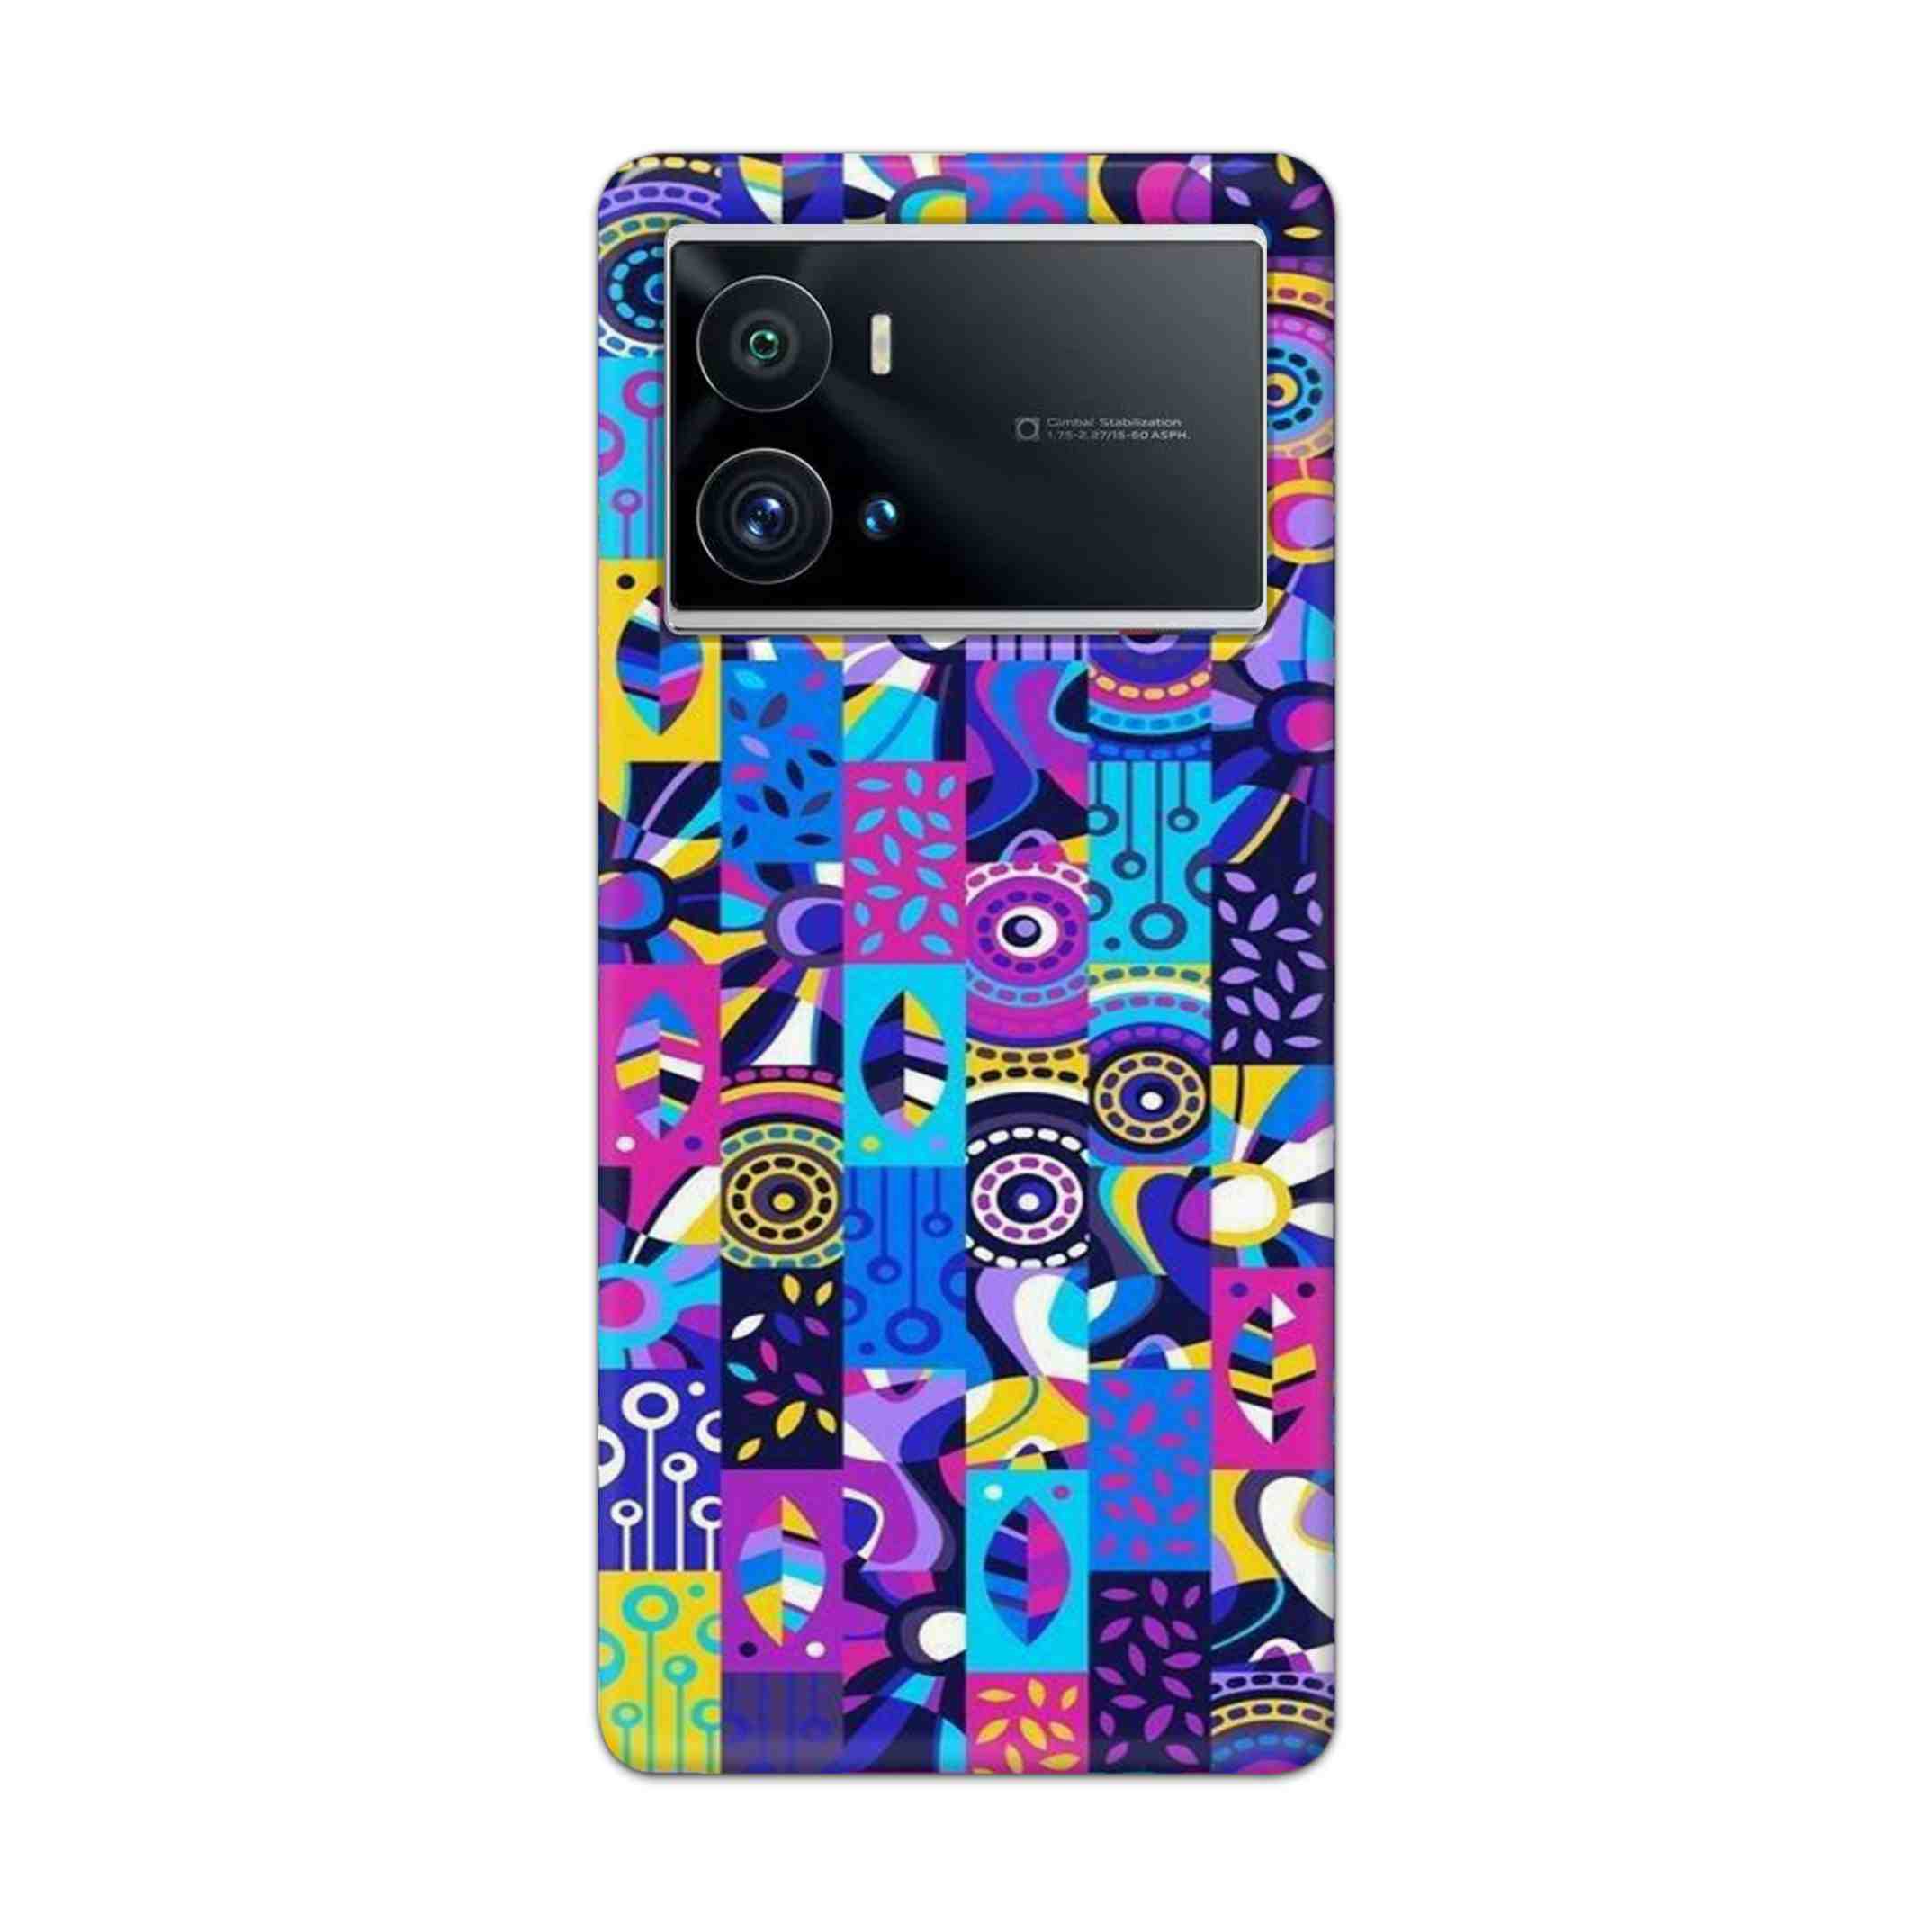 Buy Rainbow Art Hard Back Mobile Phone Case Cover For iQOO 9 Pro 5G Online